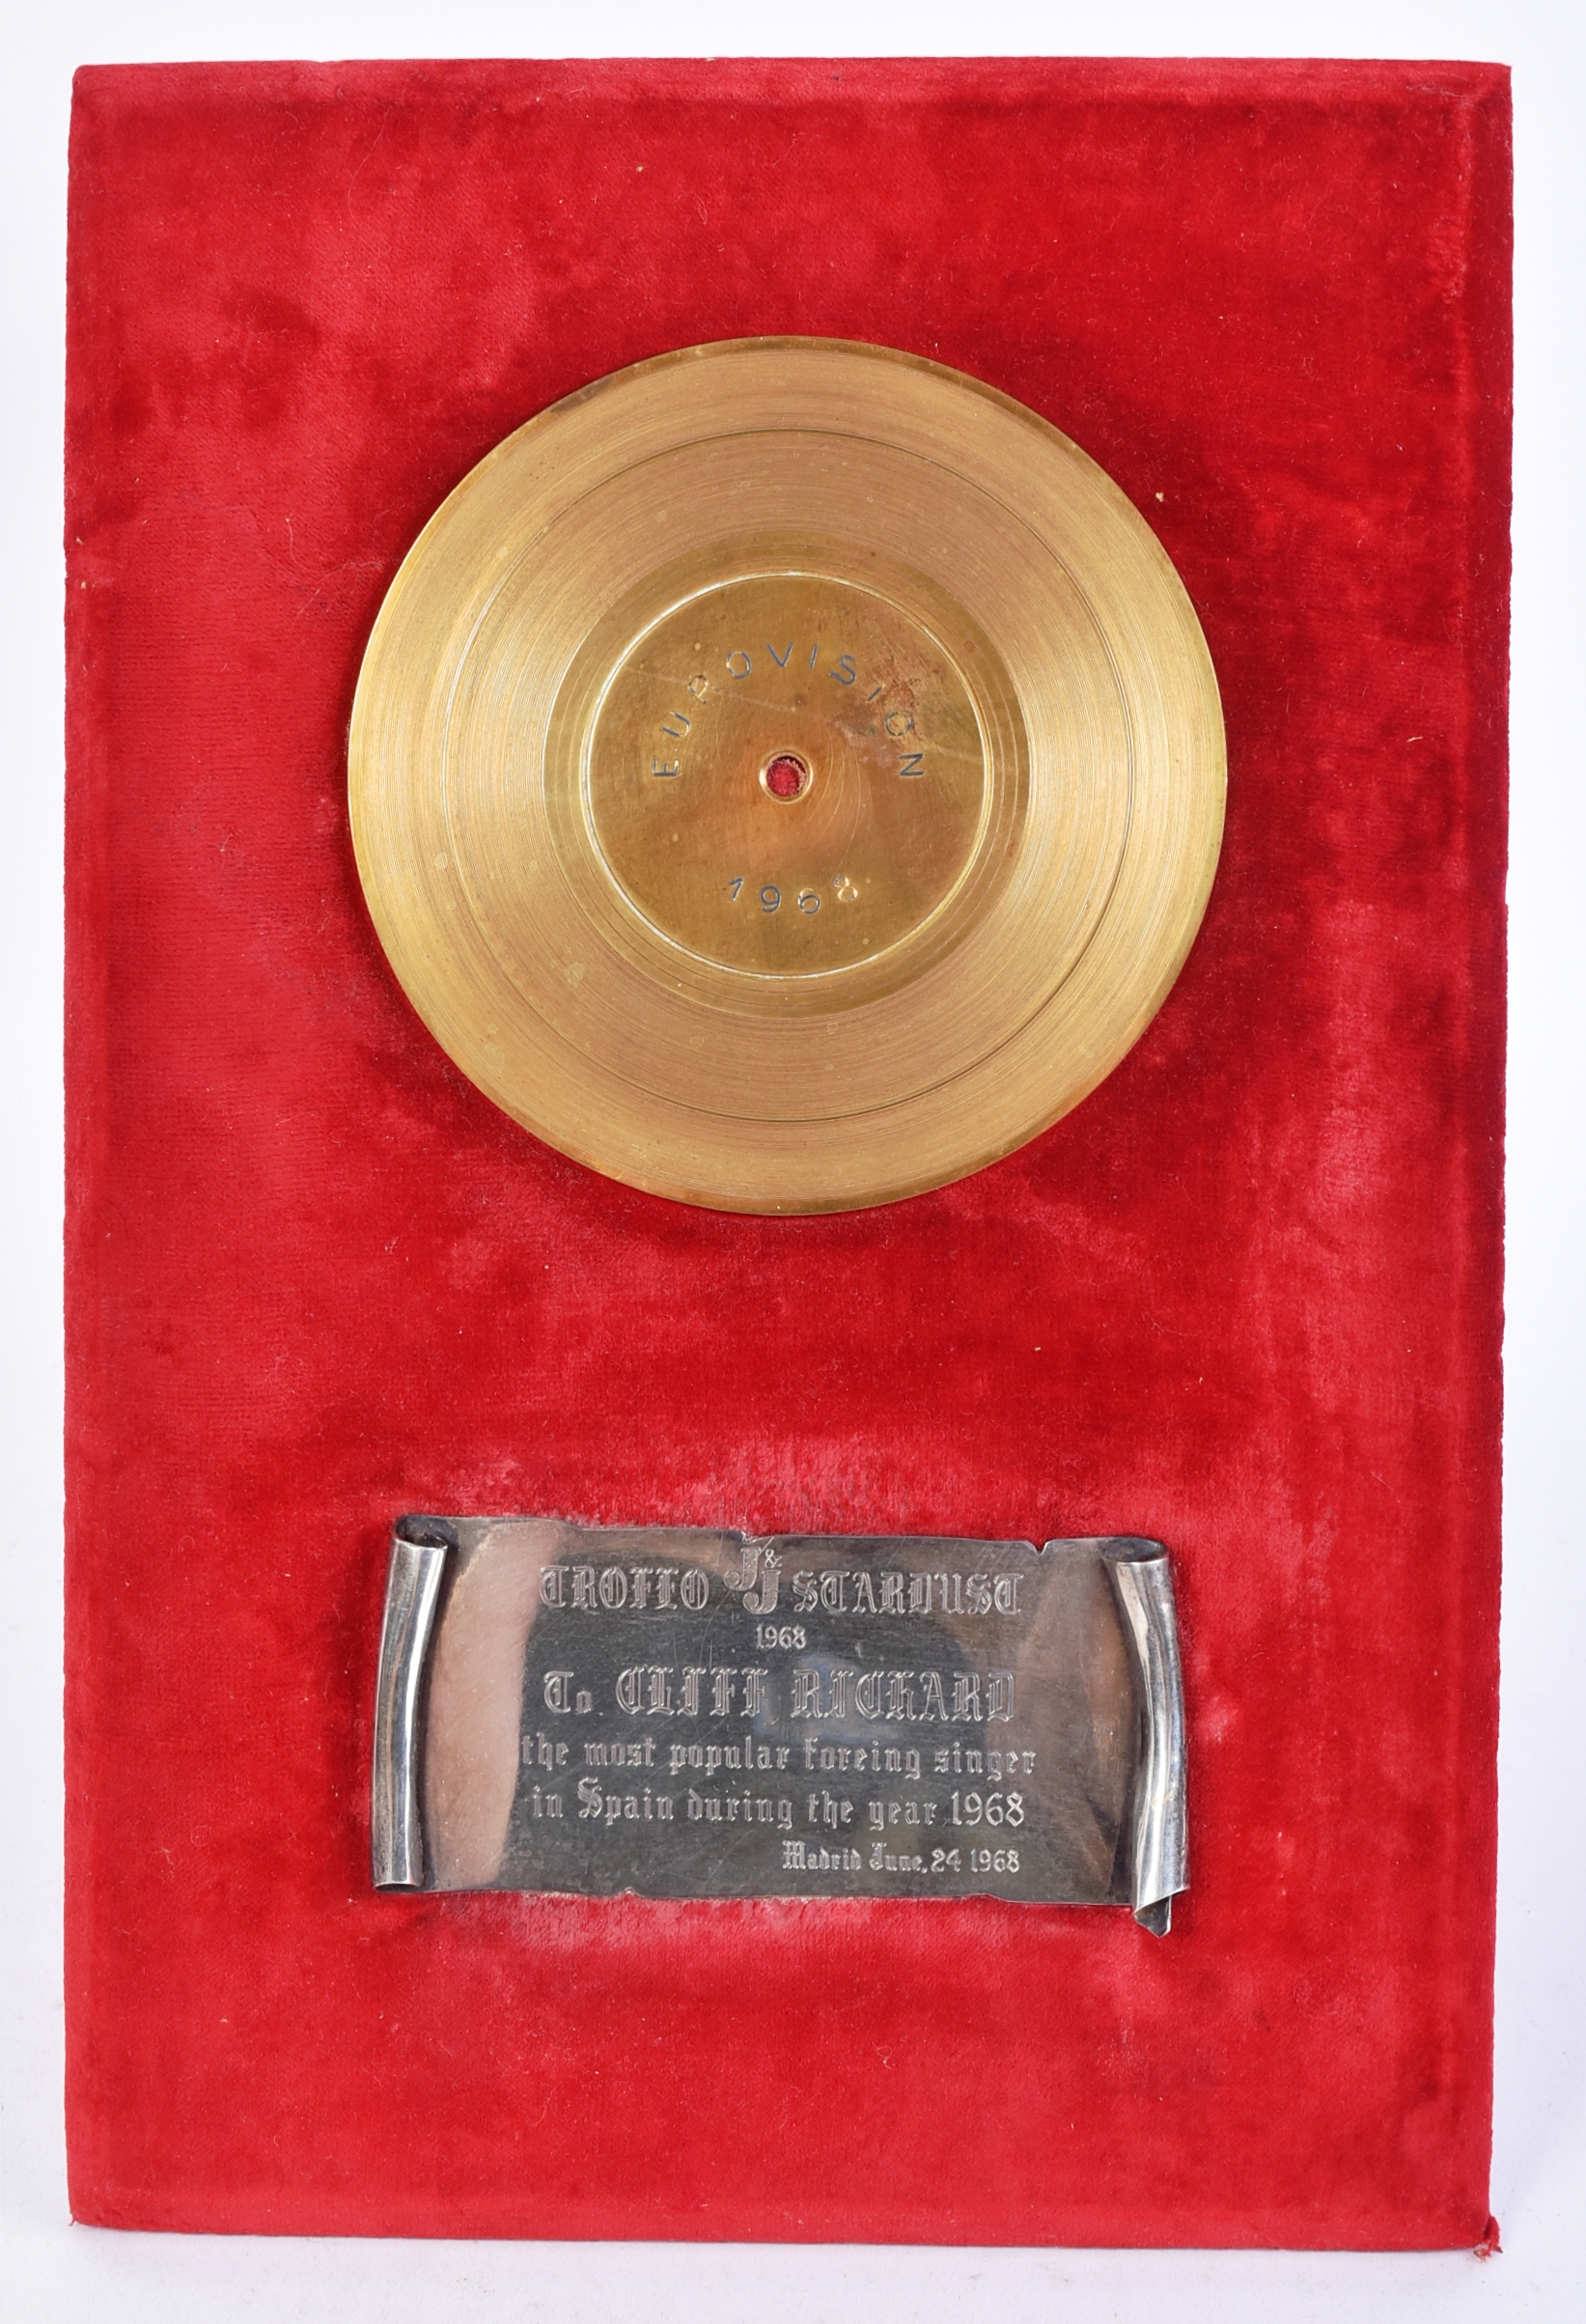 EUROVISION 1968 - ORIGINAL SPANISH AWARD TO CLIFF RICHARD - Image 2 of 5